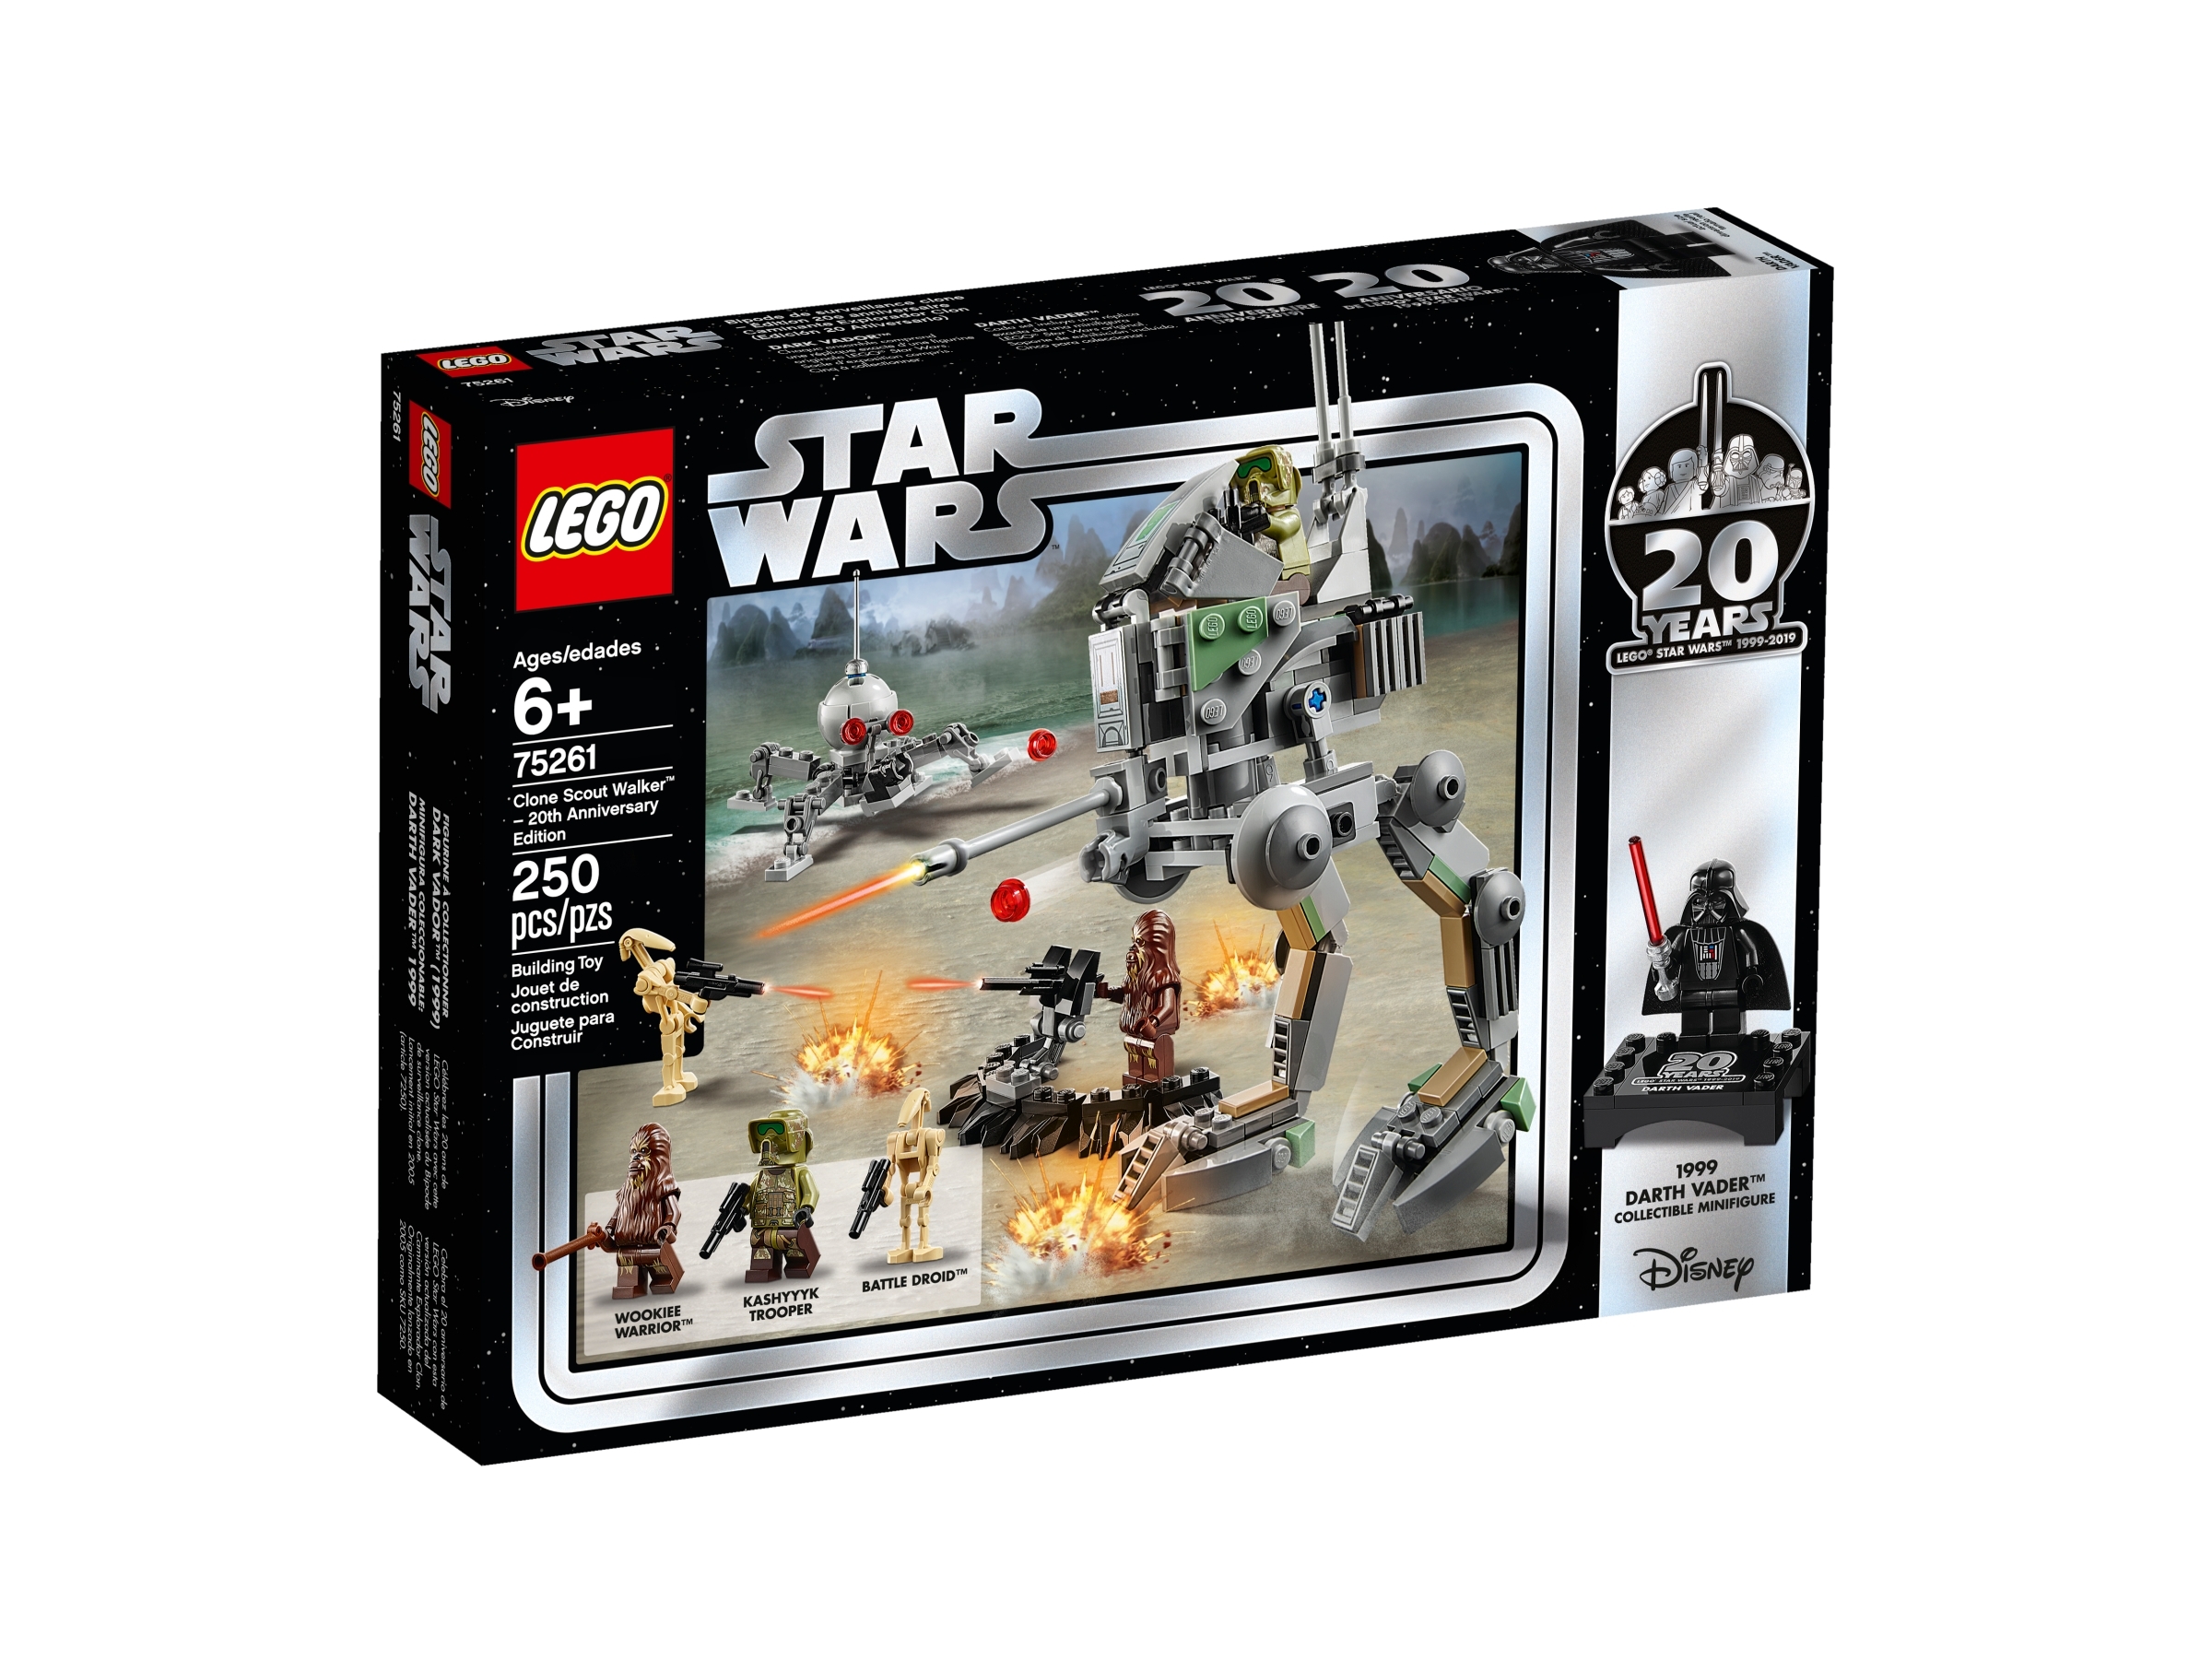 Lego Star Wars Wookiee Warrior minifigure from set 75261 